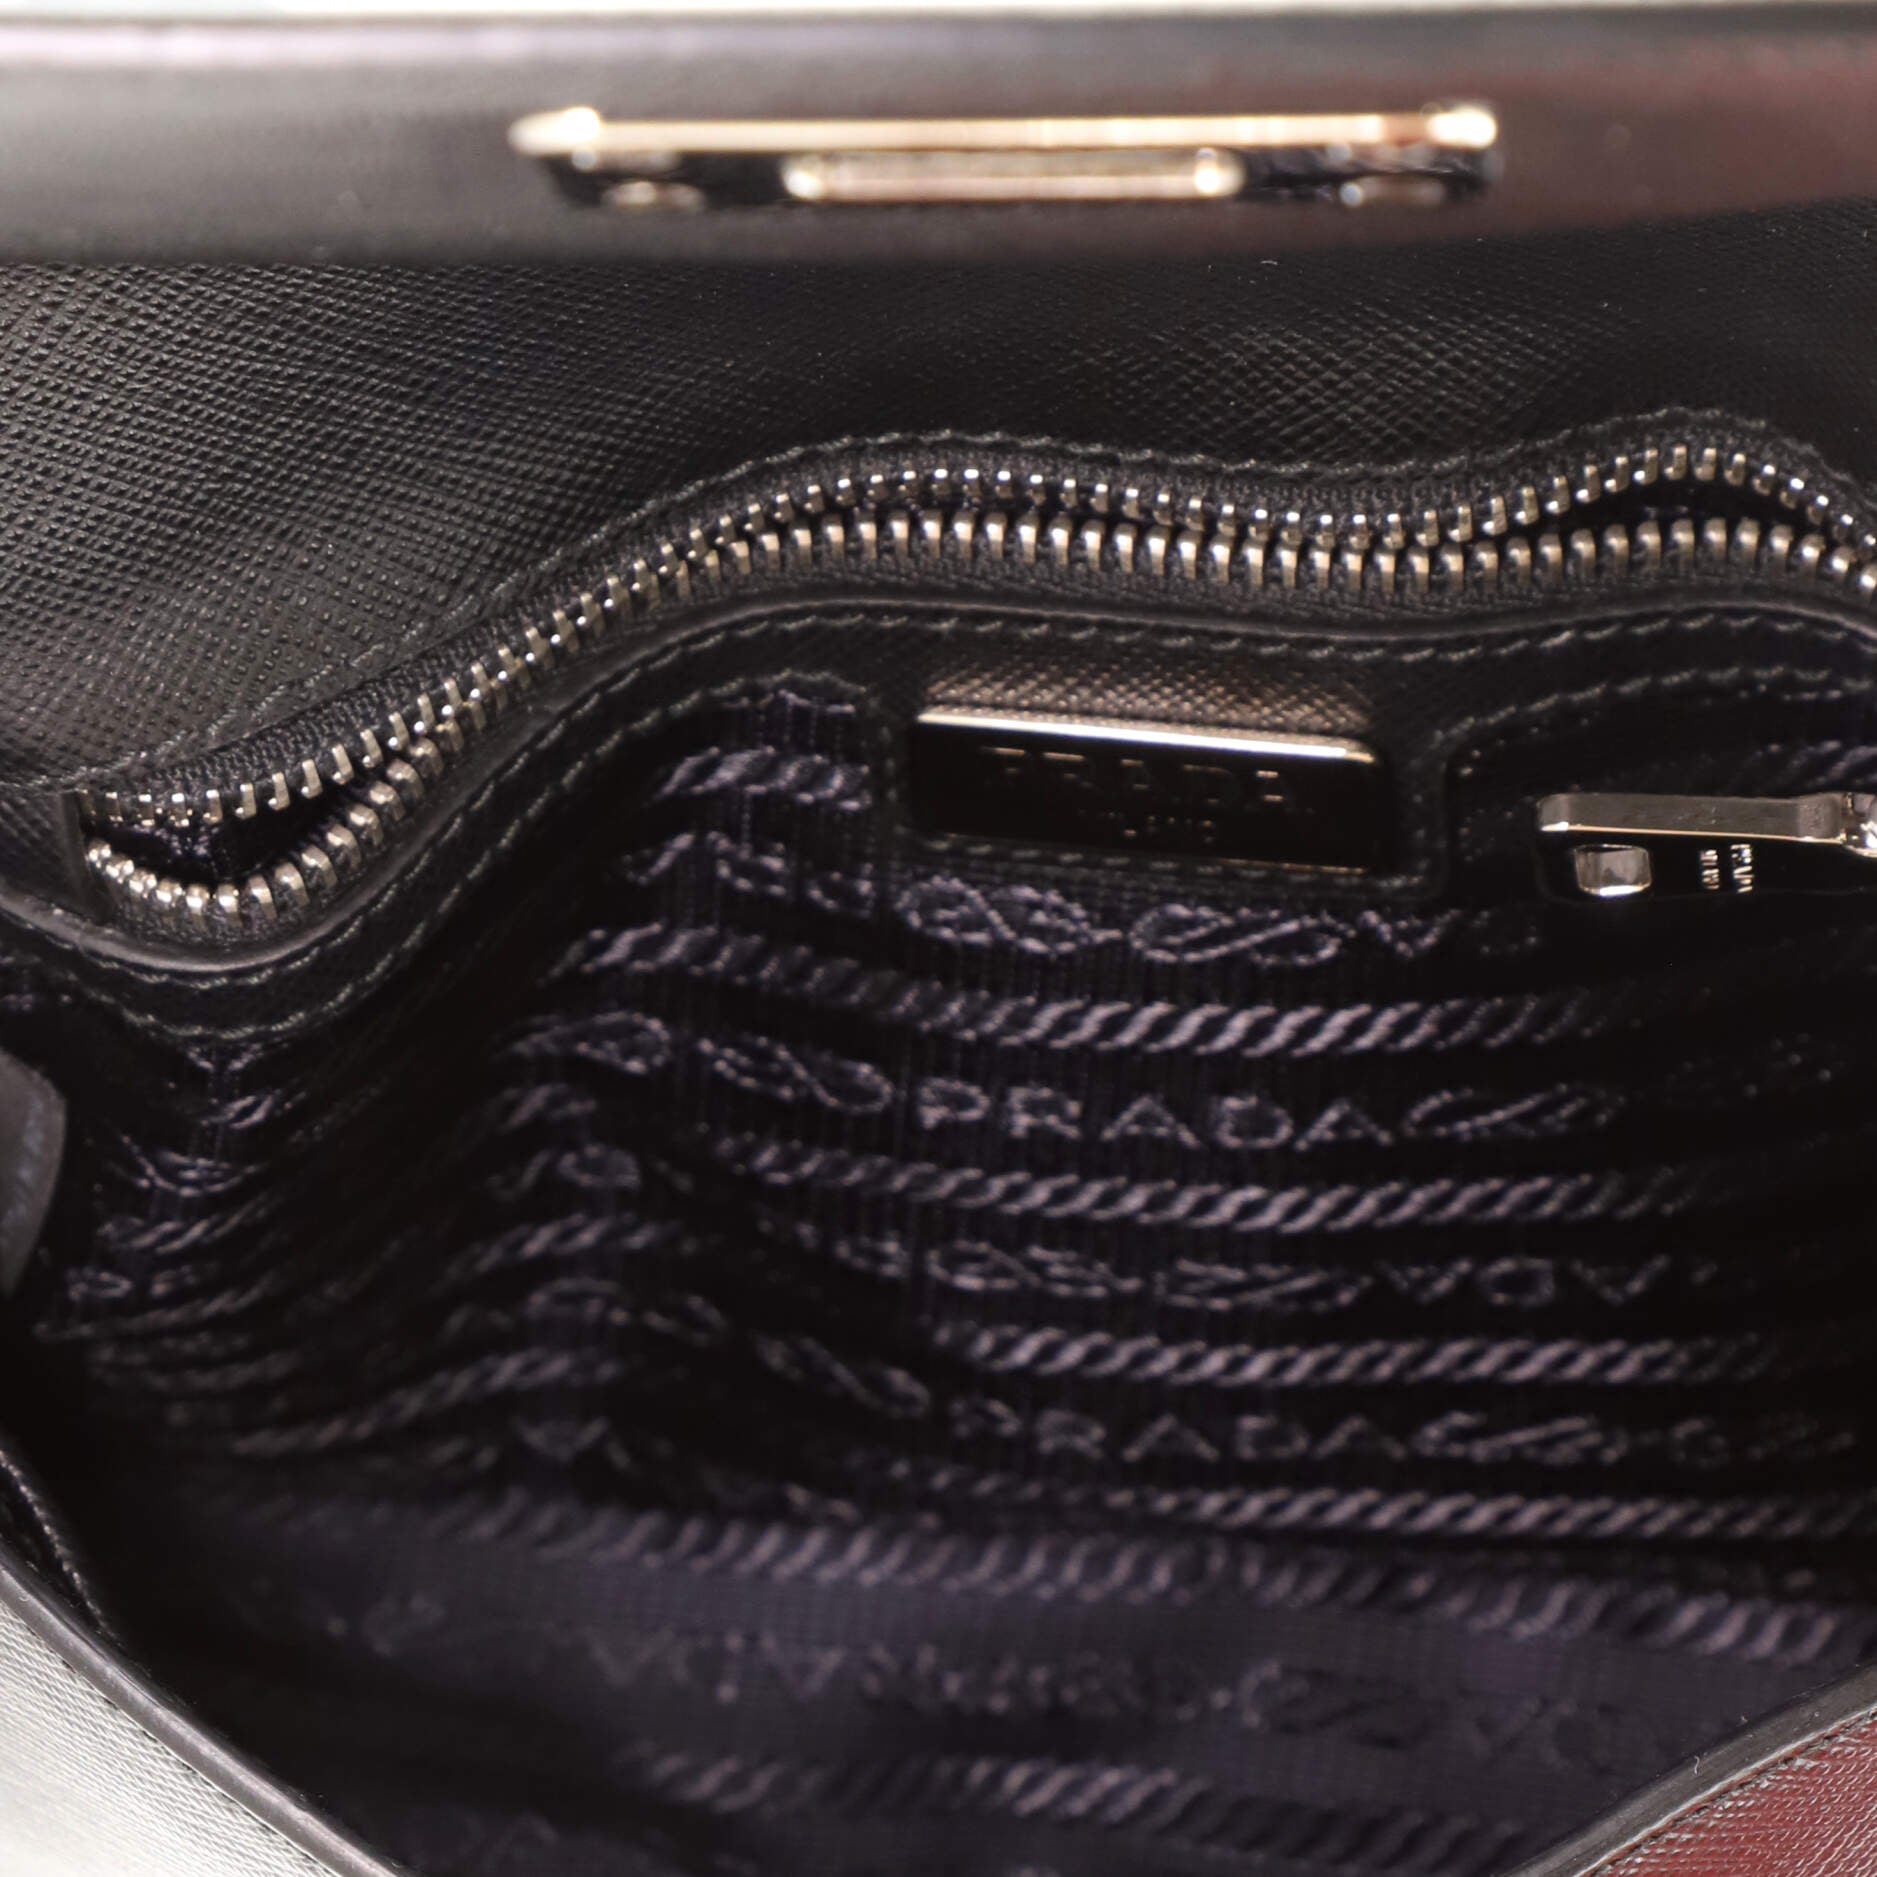 Petal Saffiano Leather Flap Chain Bag